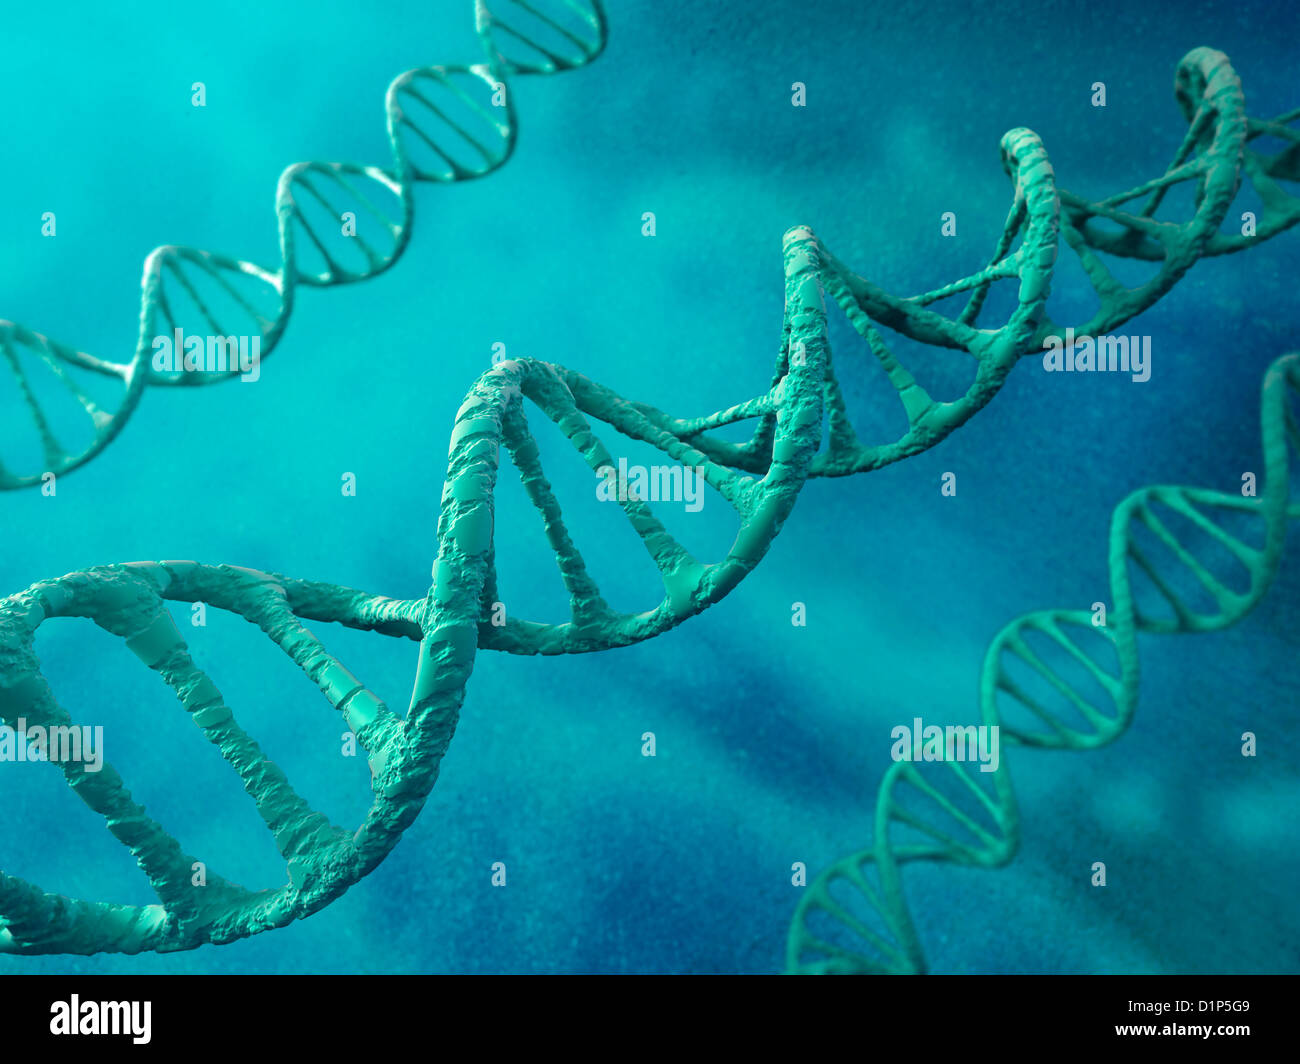 DNA-Moleküle, artwork Stockfoto